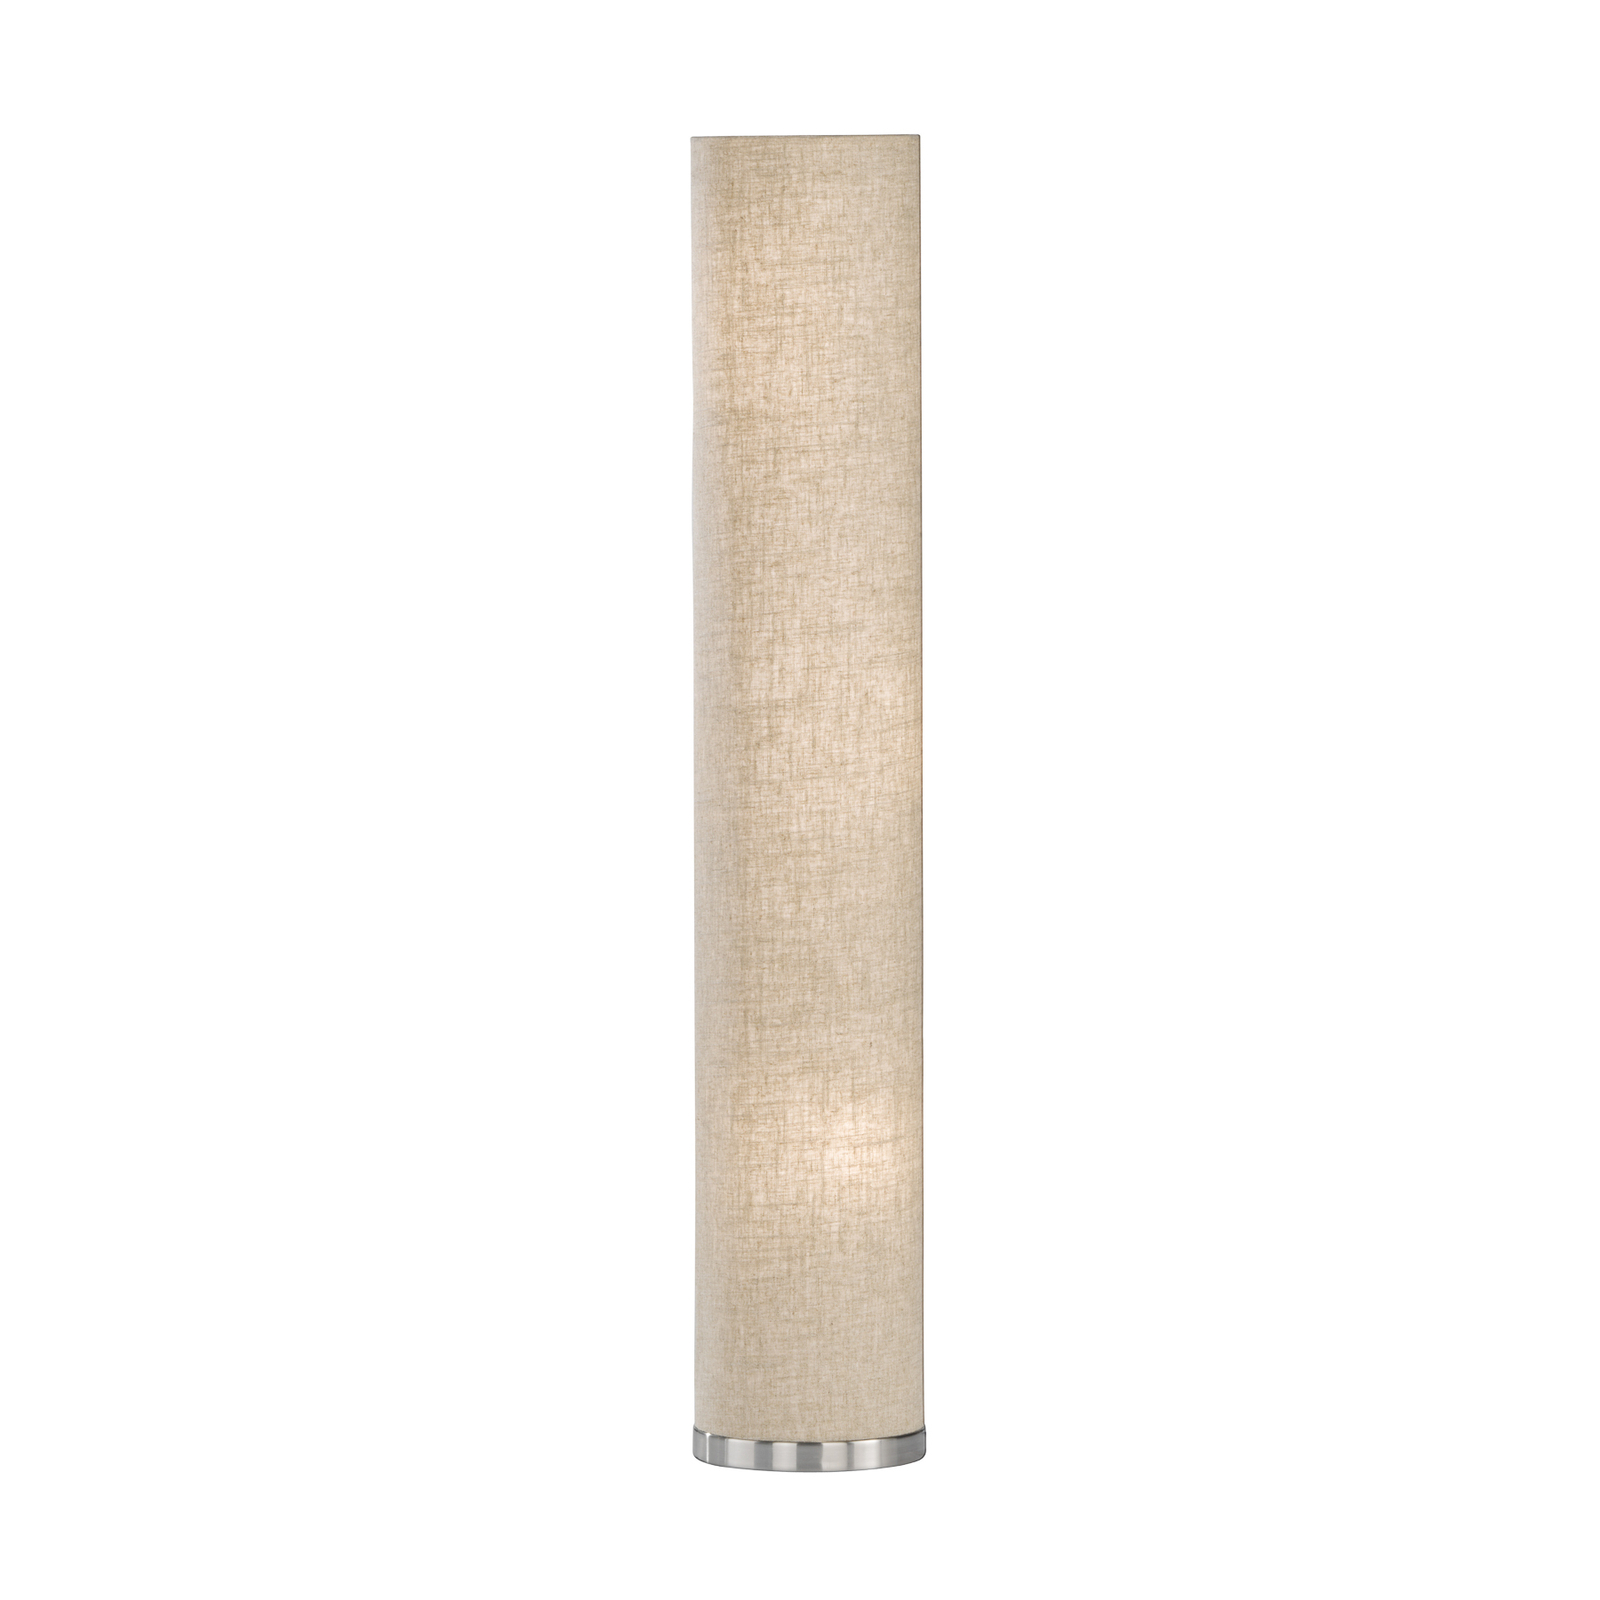 Thor gulvlampe, højde 110 cm, sandfarvet/nikkel